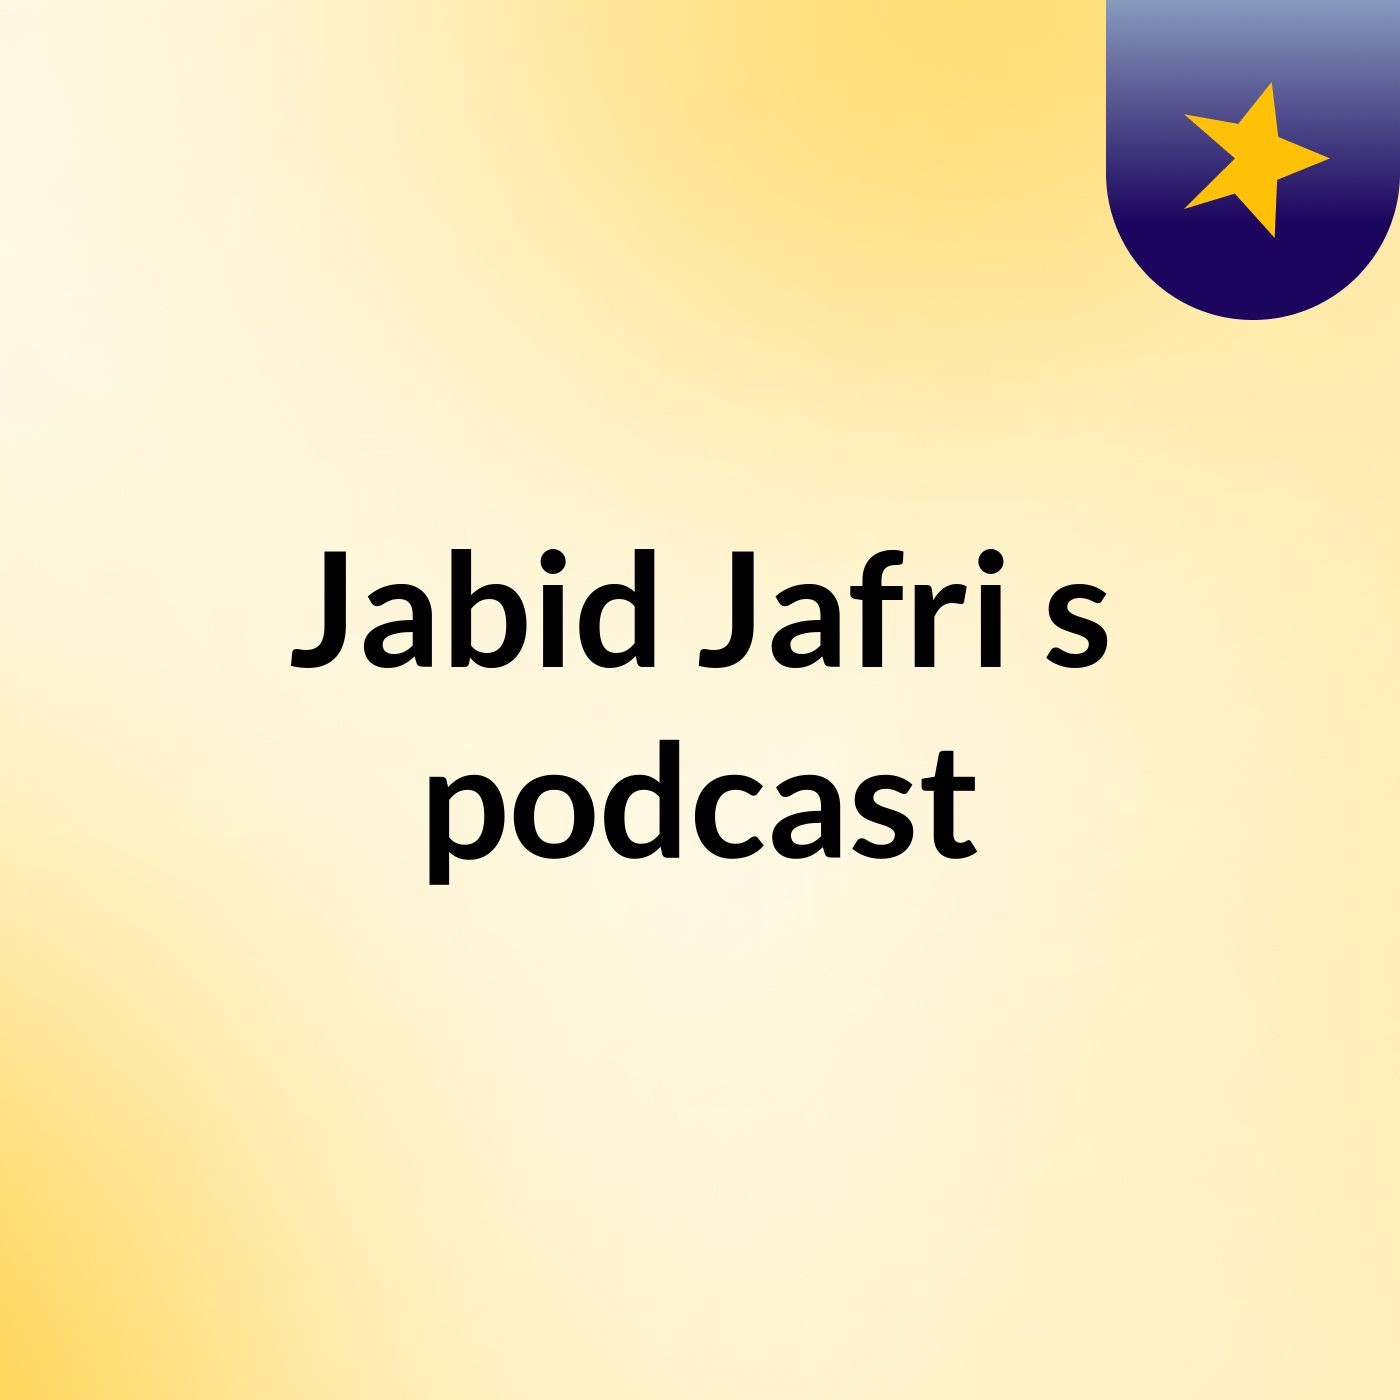 Jabid Jafri's podcast